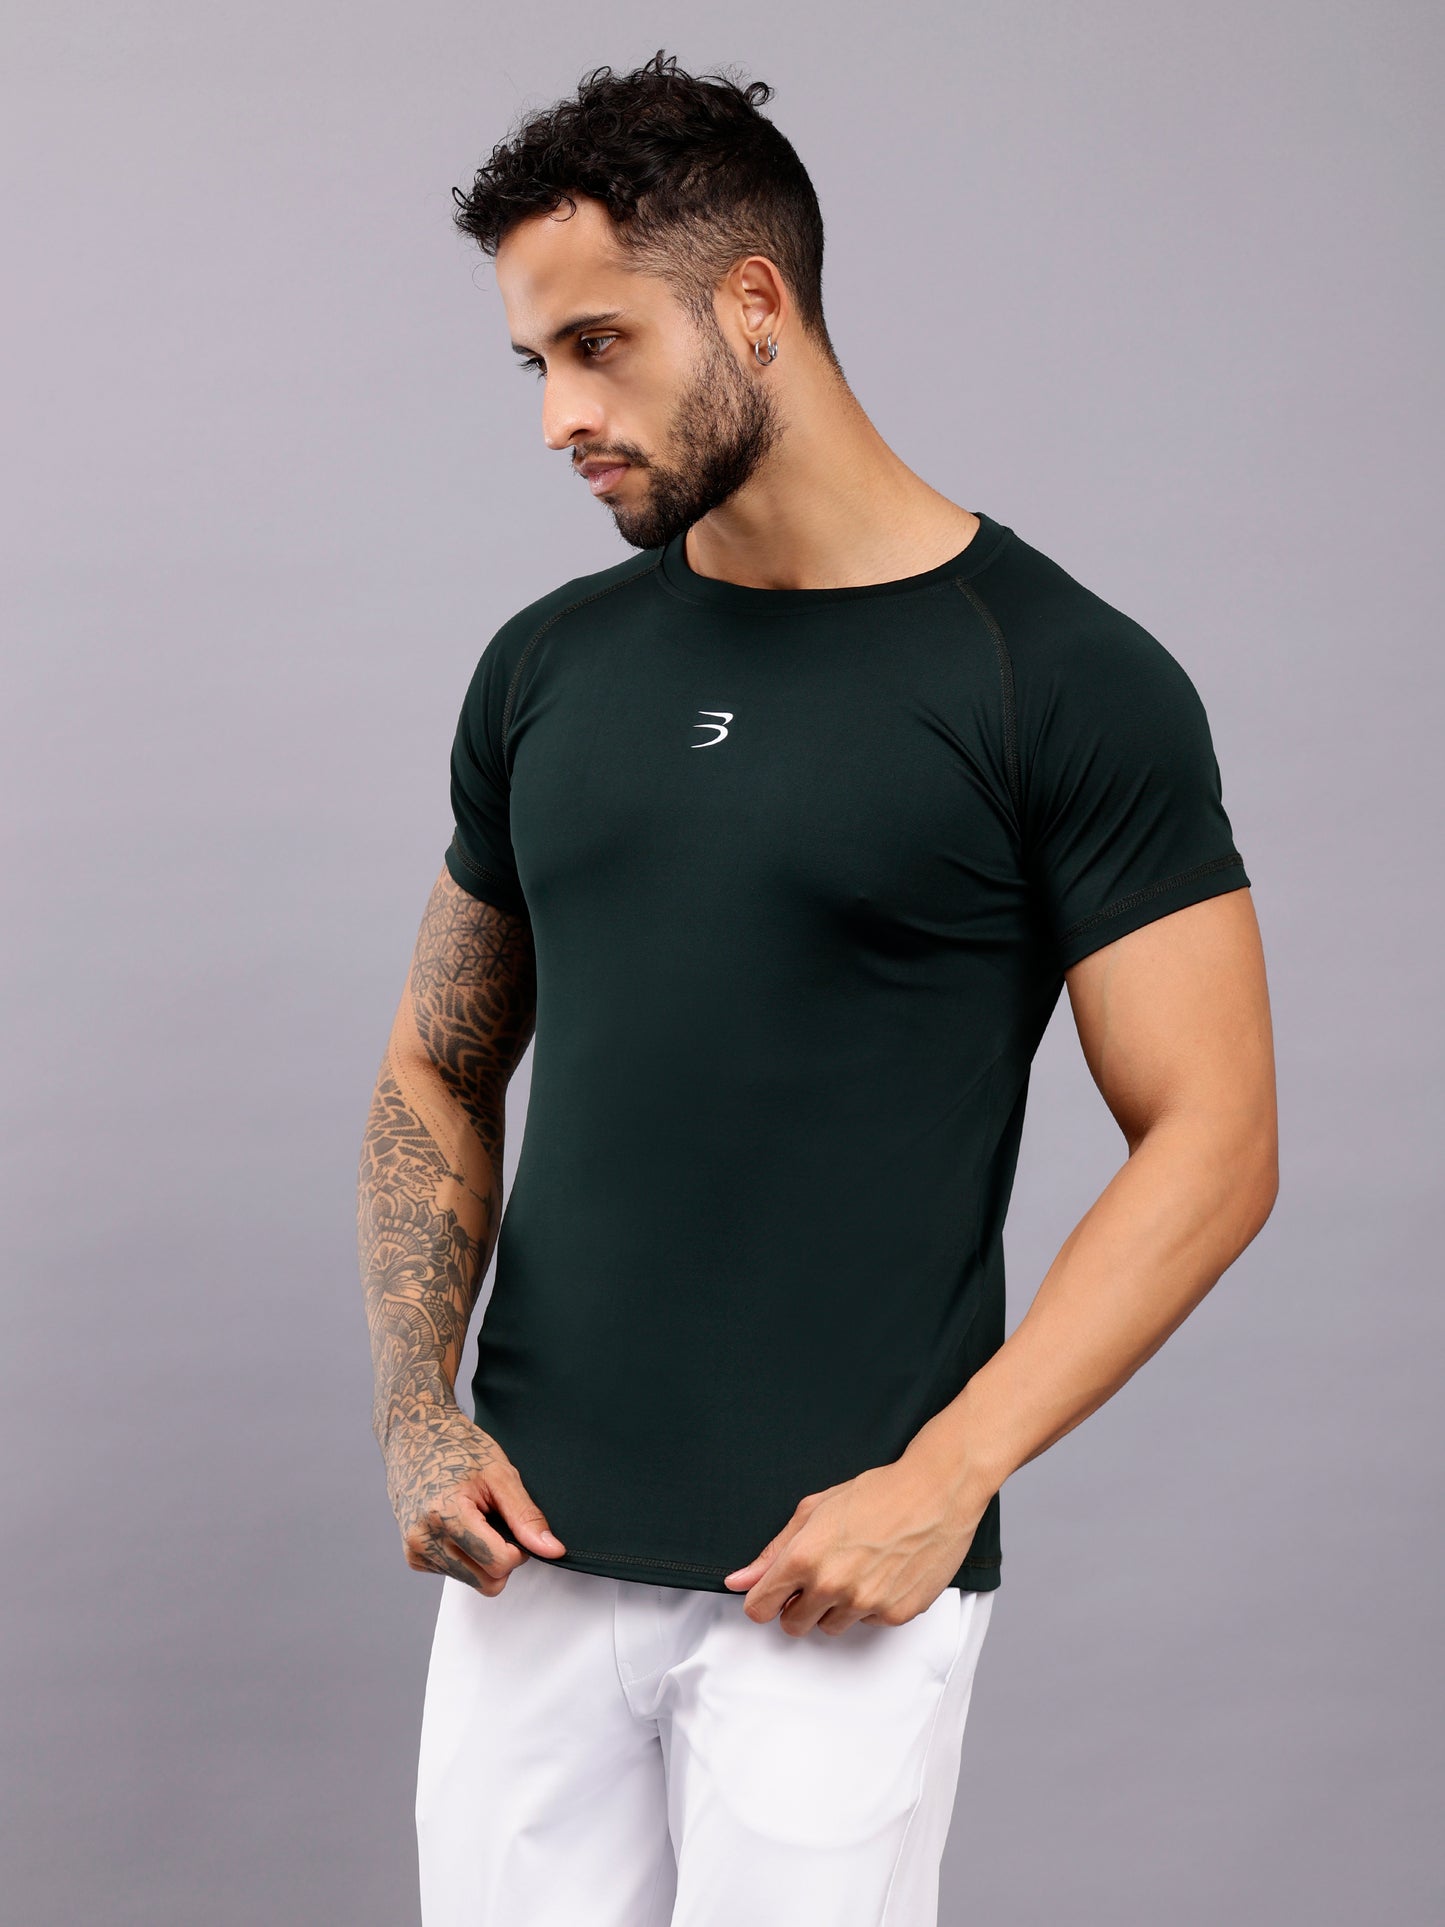 Round neck half sleeve activewear tshirt-Green